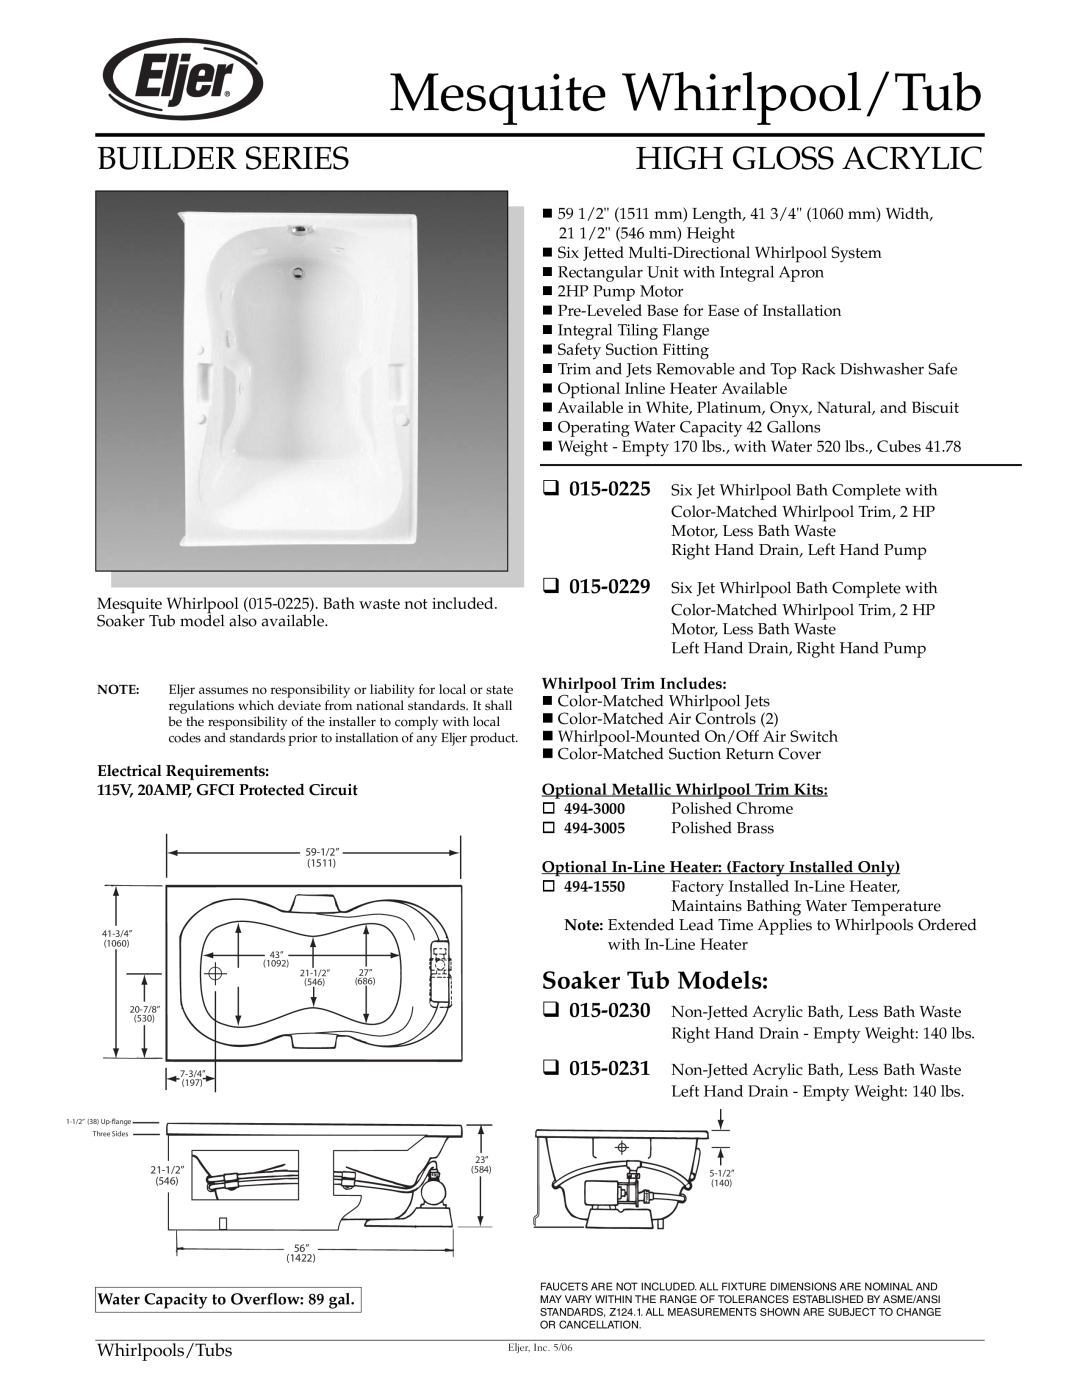 American Standard 015-0225 dimensions Mesquite Whirlpool/Tub, Builder Series, High Gloss Acrylic, Soaker Tub Models 